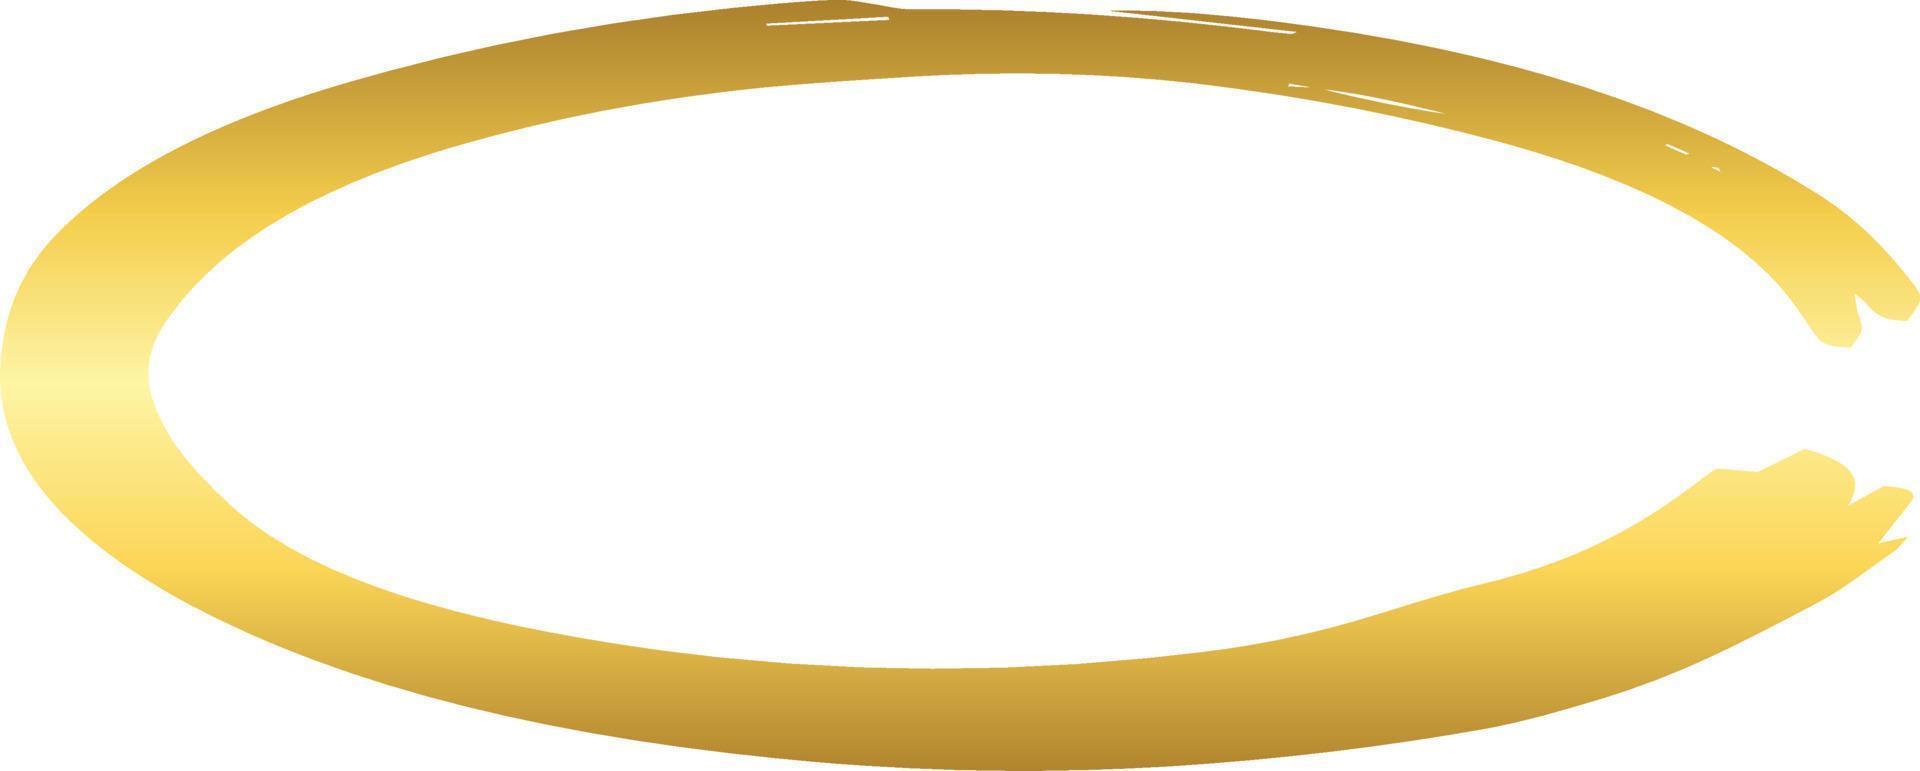 ovaler goldener Pinselstrich-Gestaltungselementvektor vektor